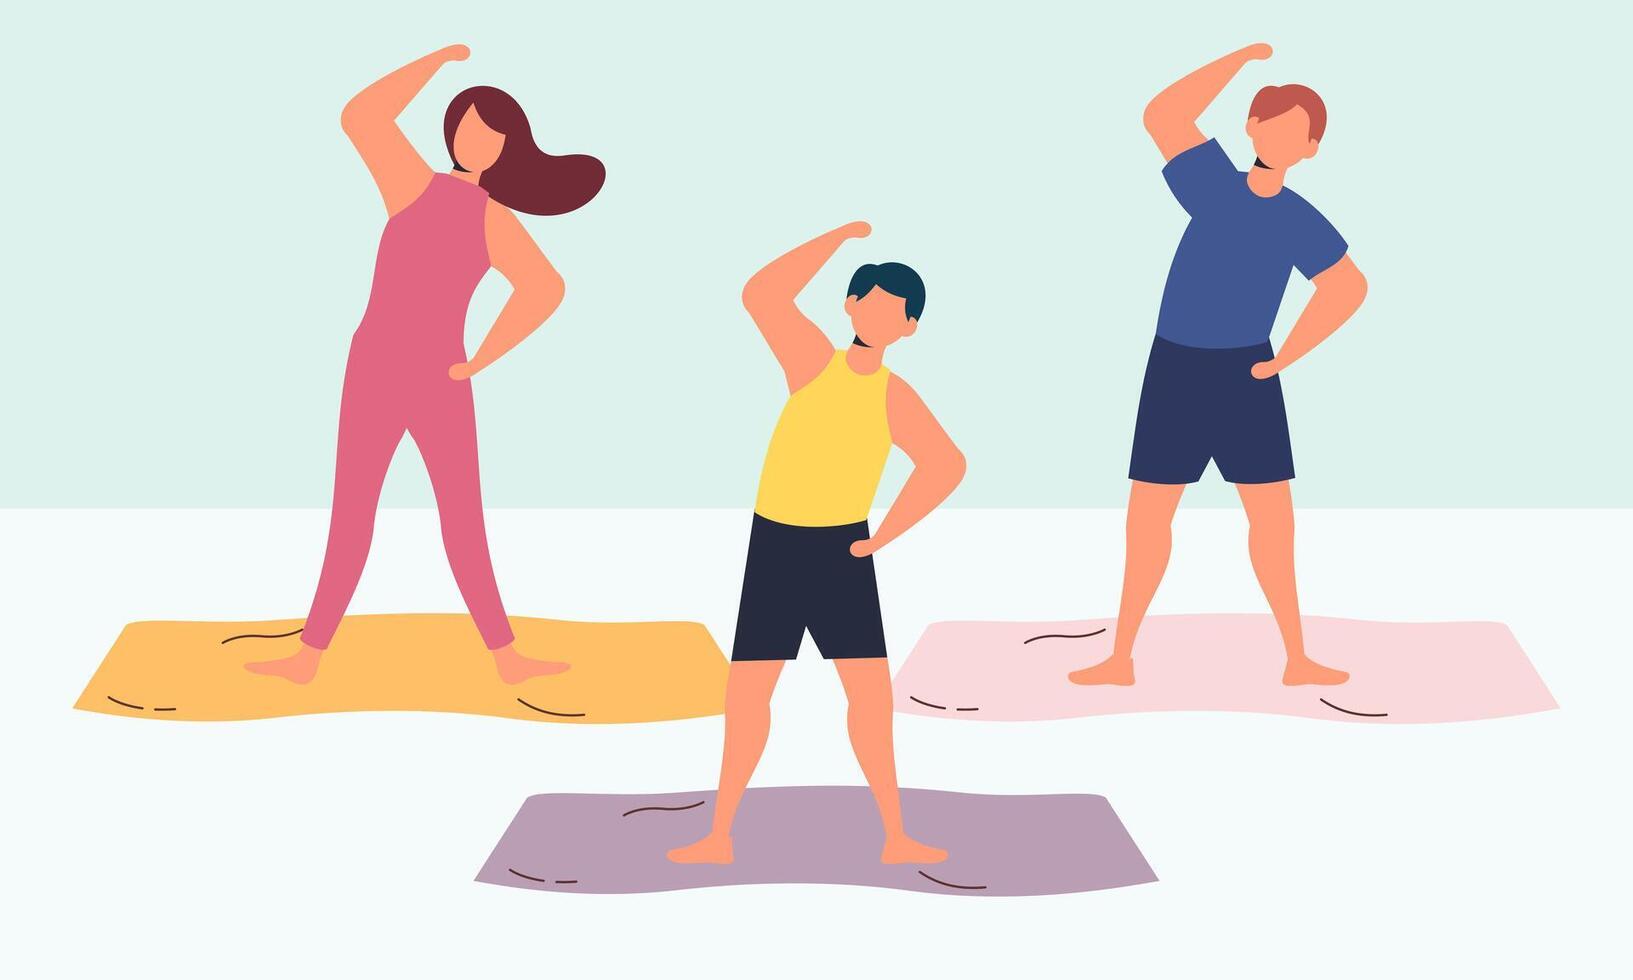 Aerobics class, training, sports activity illustration vector